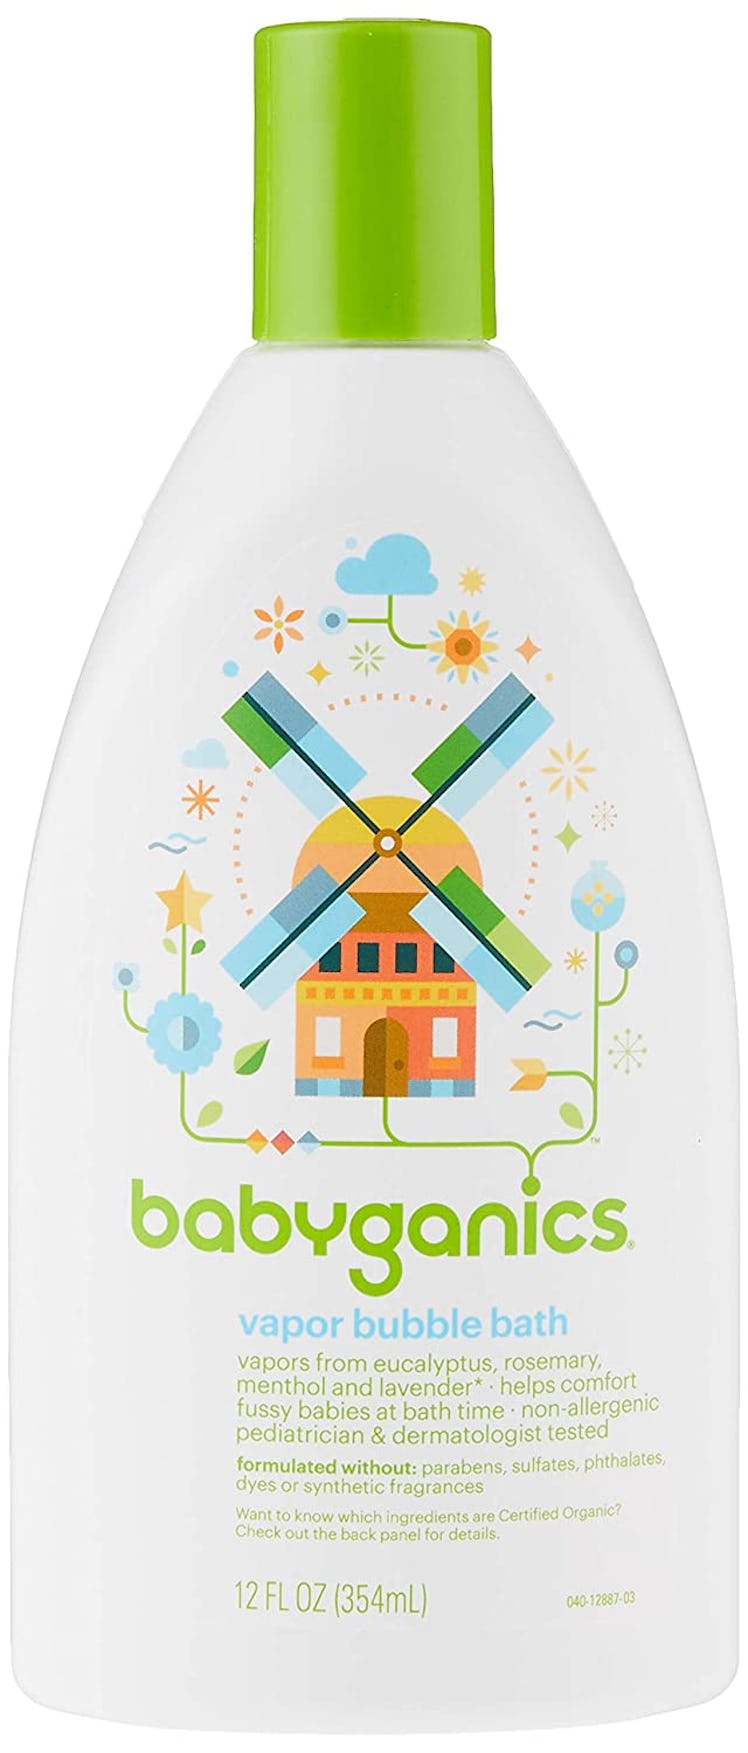 Vapor Bubble Bath by BabyGanics